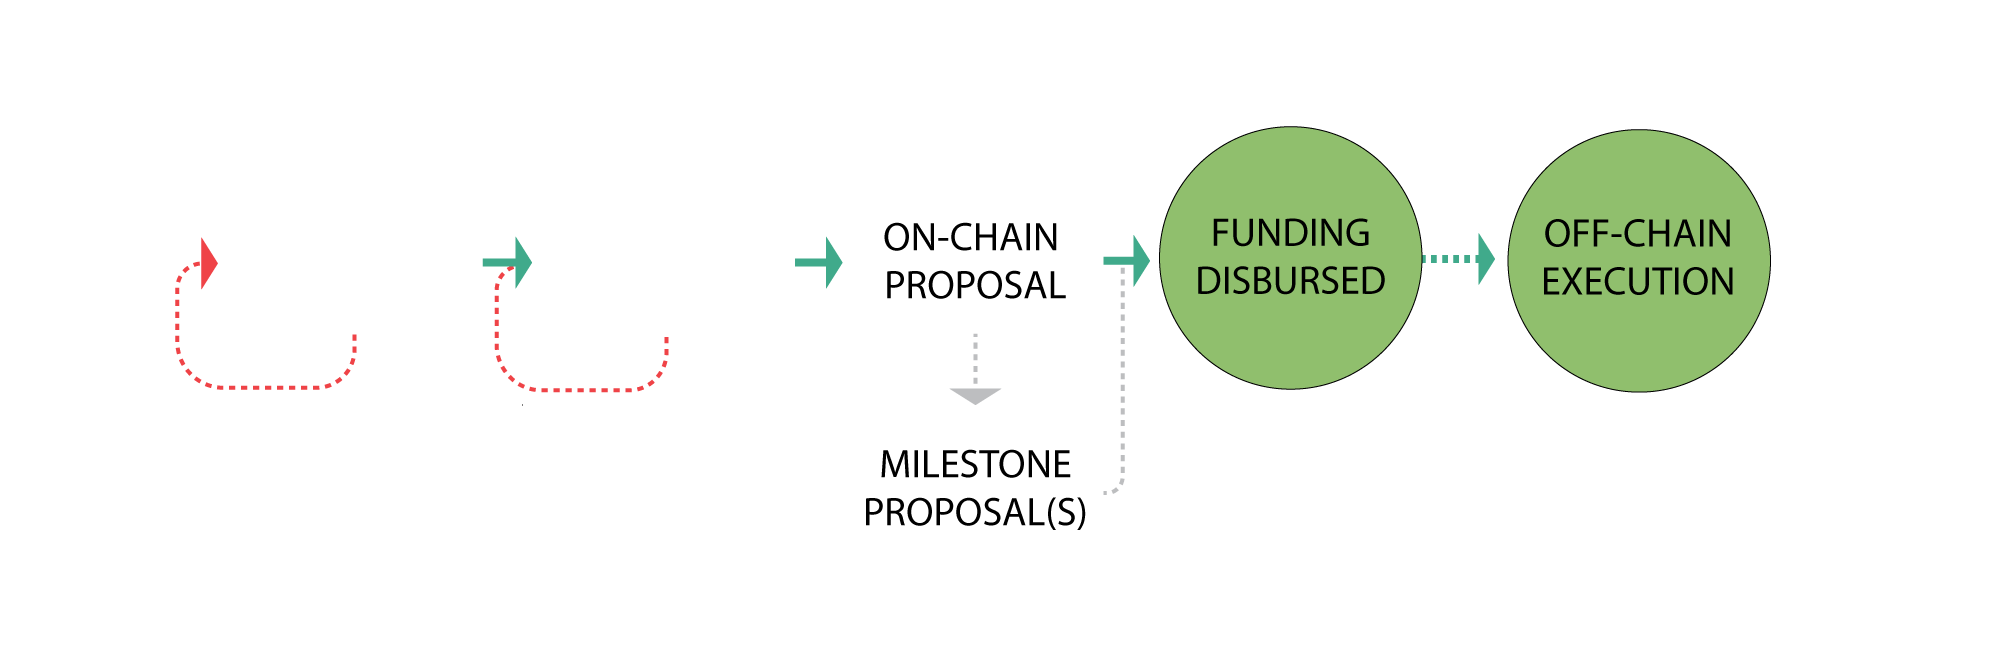 Funding Process